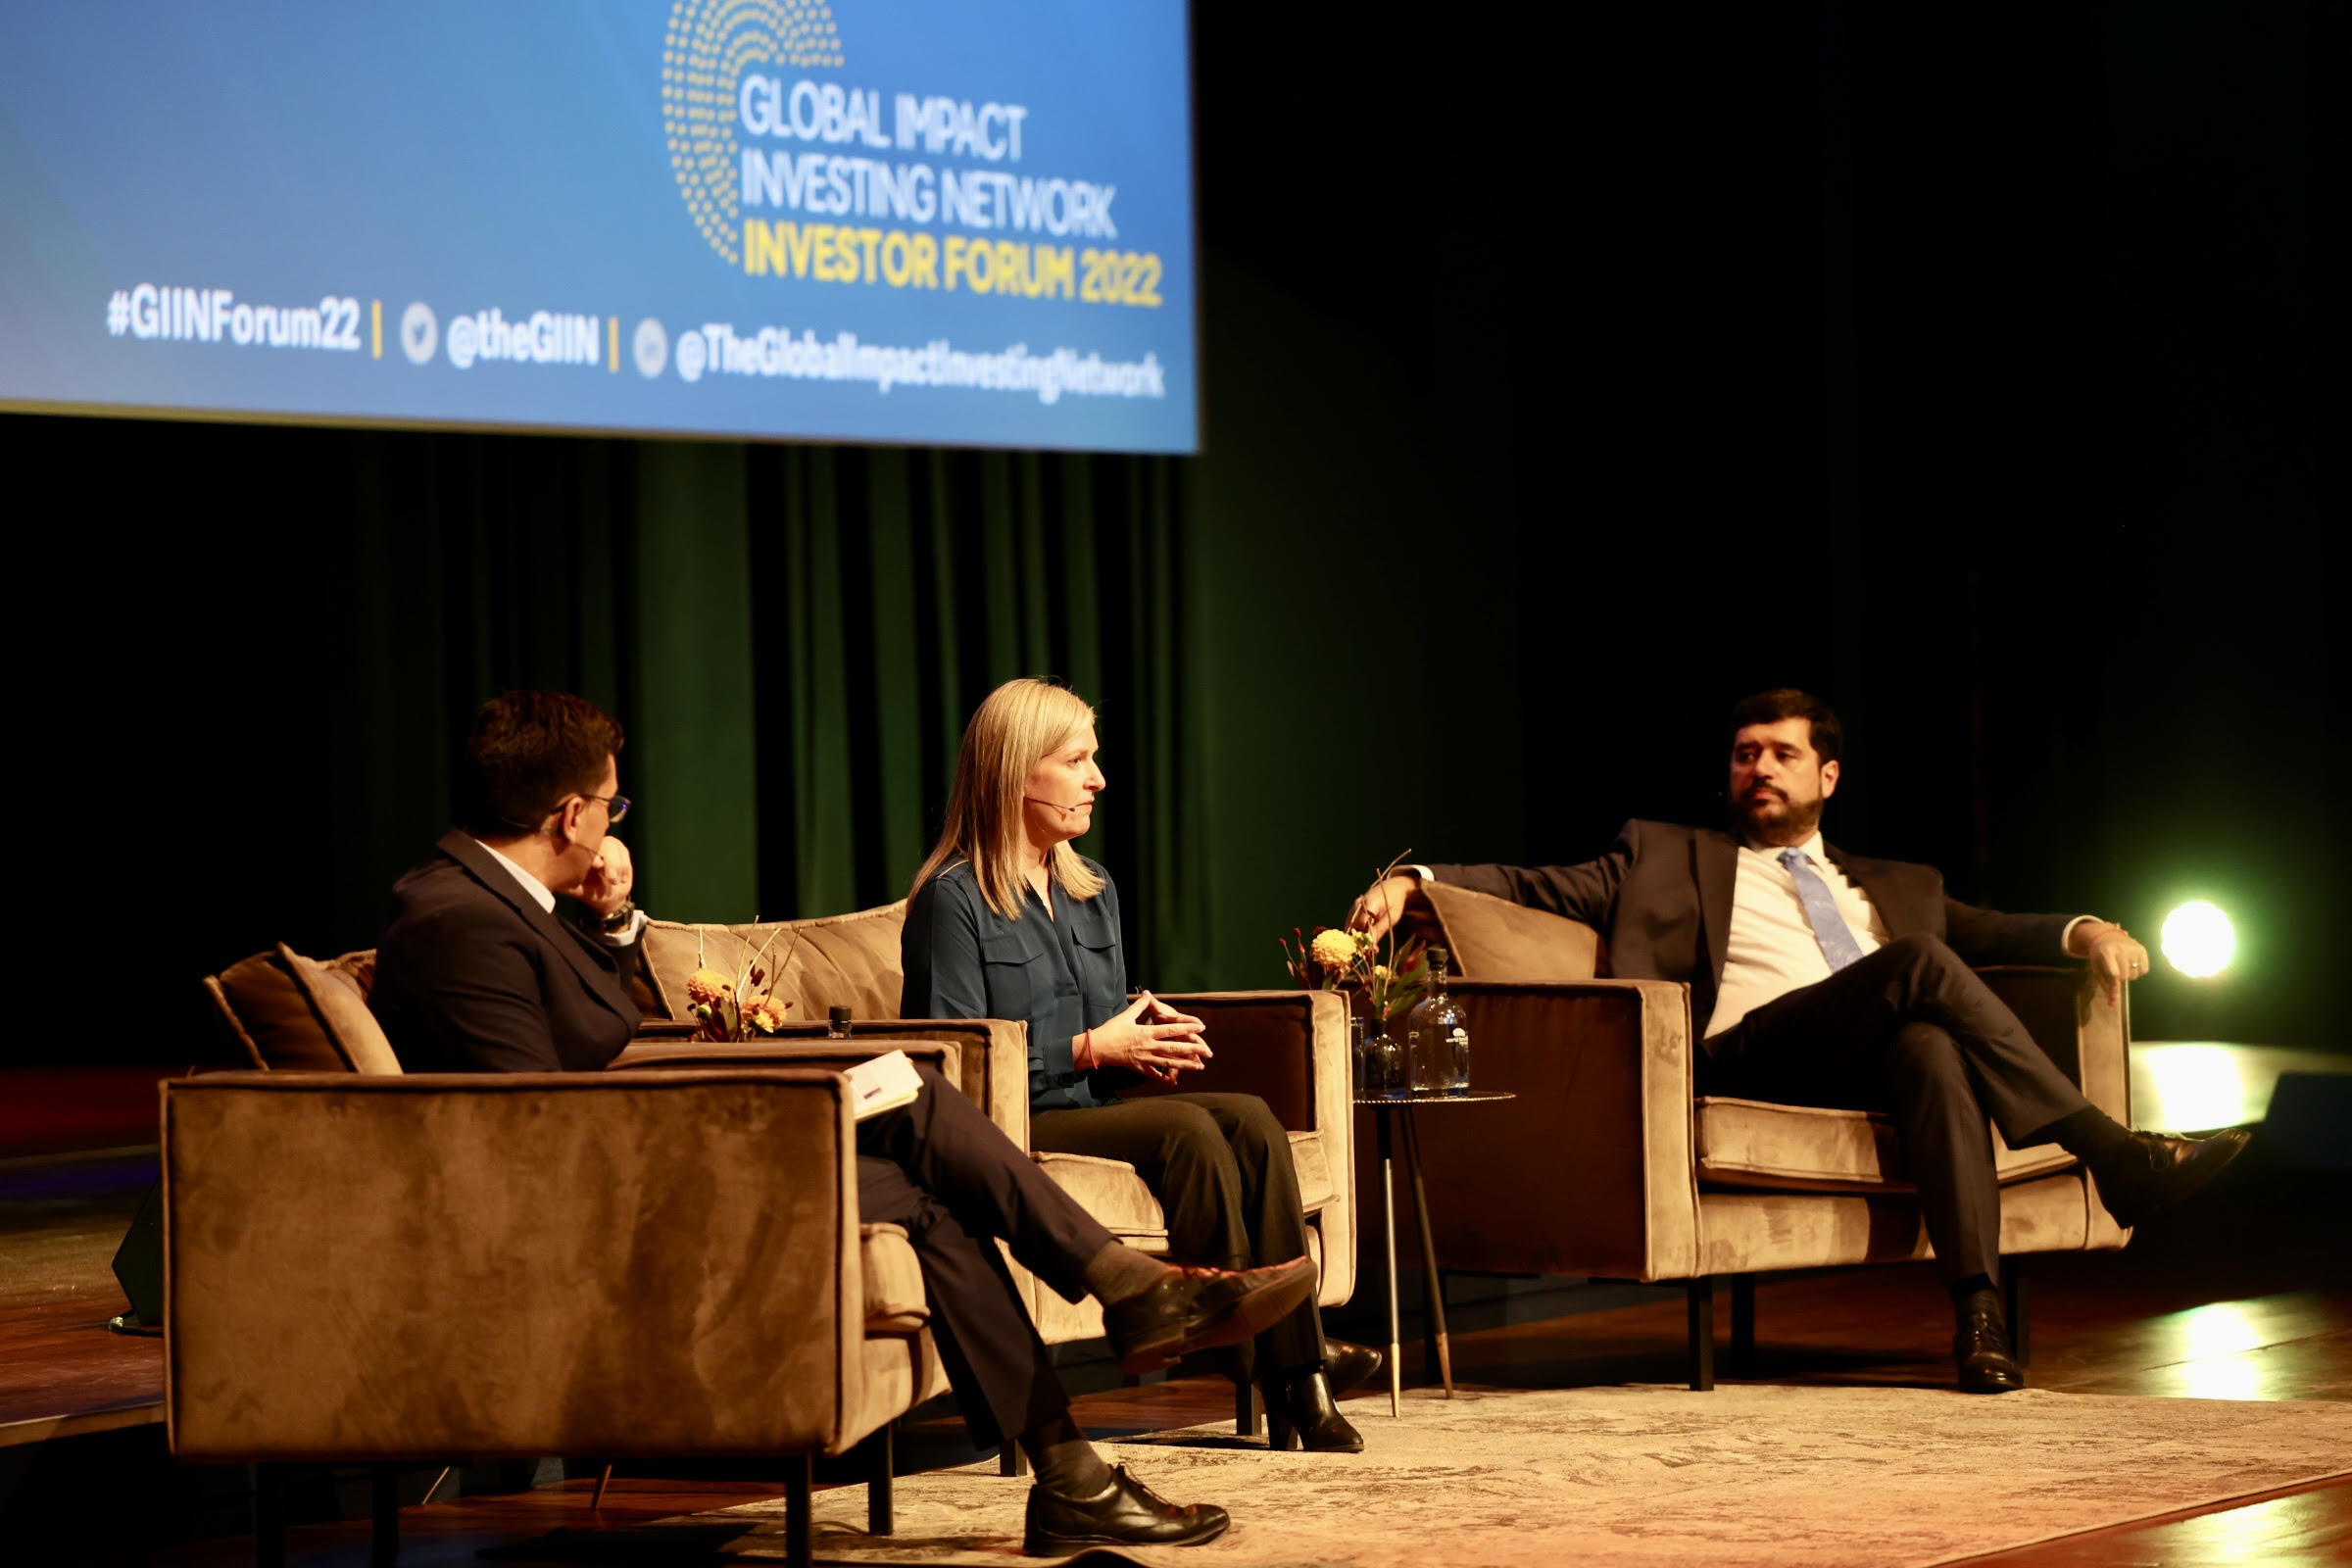 François Bonnici, Marcelo Behar, Colleen Ostrowski speak at the GIIN summit